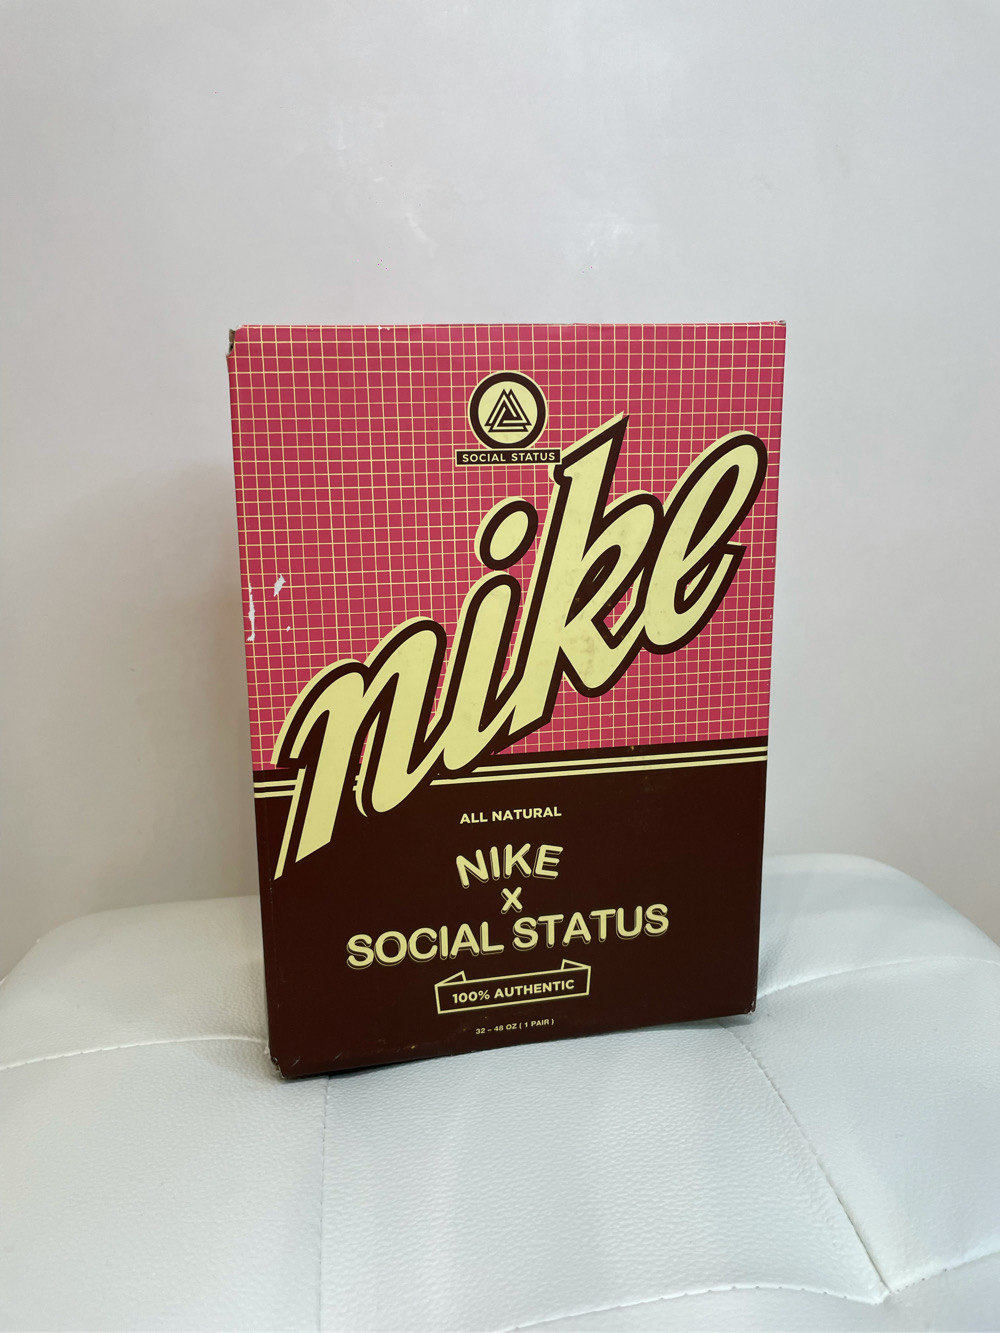 Social Status x dunk low strawberry milk Nike Dunk Low "Strawberry Milk"